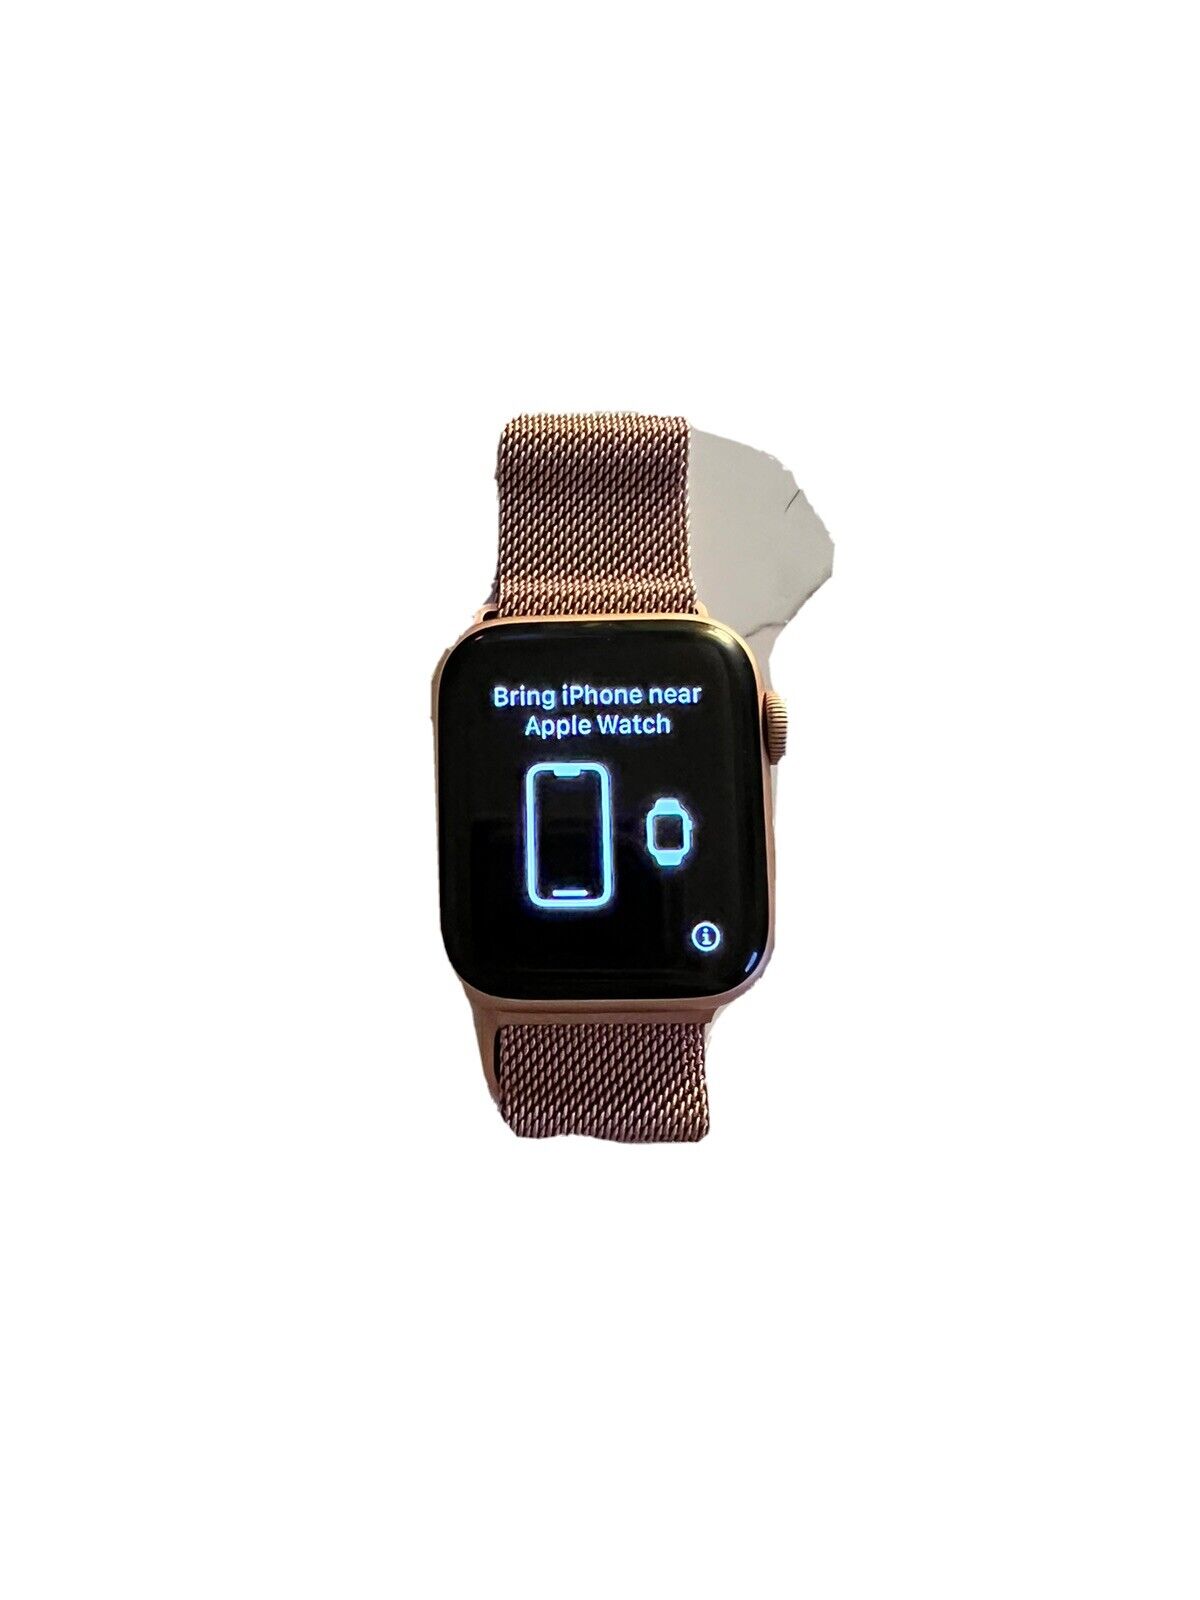 Apple Watch Series 4 40mm (GPS + Cellular) | eBay